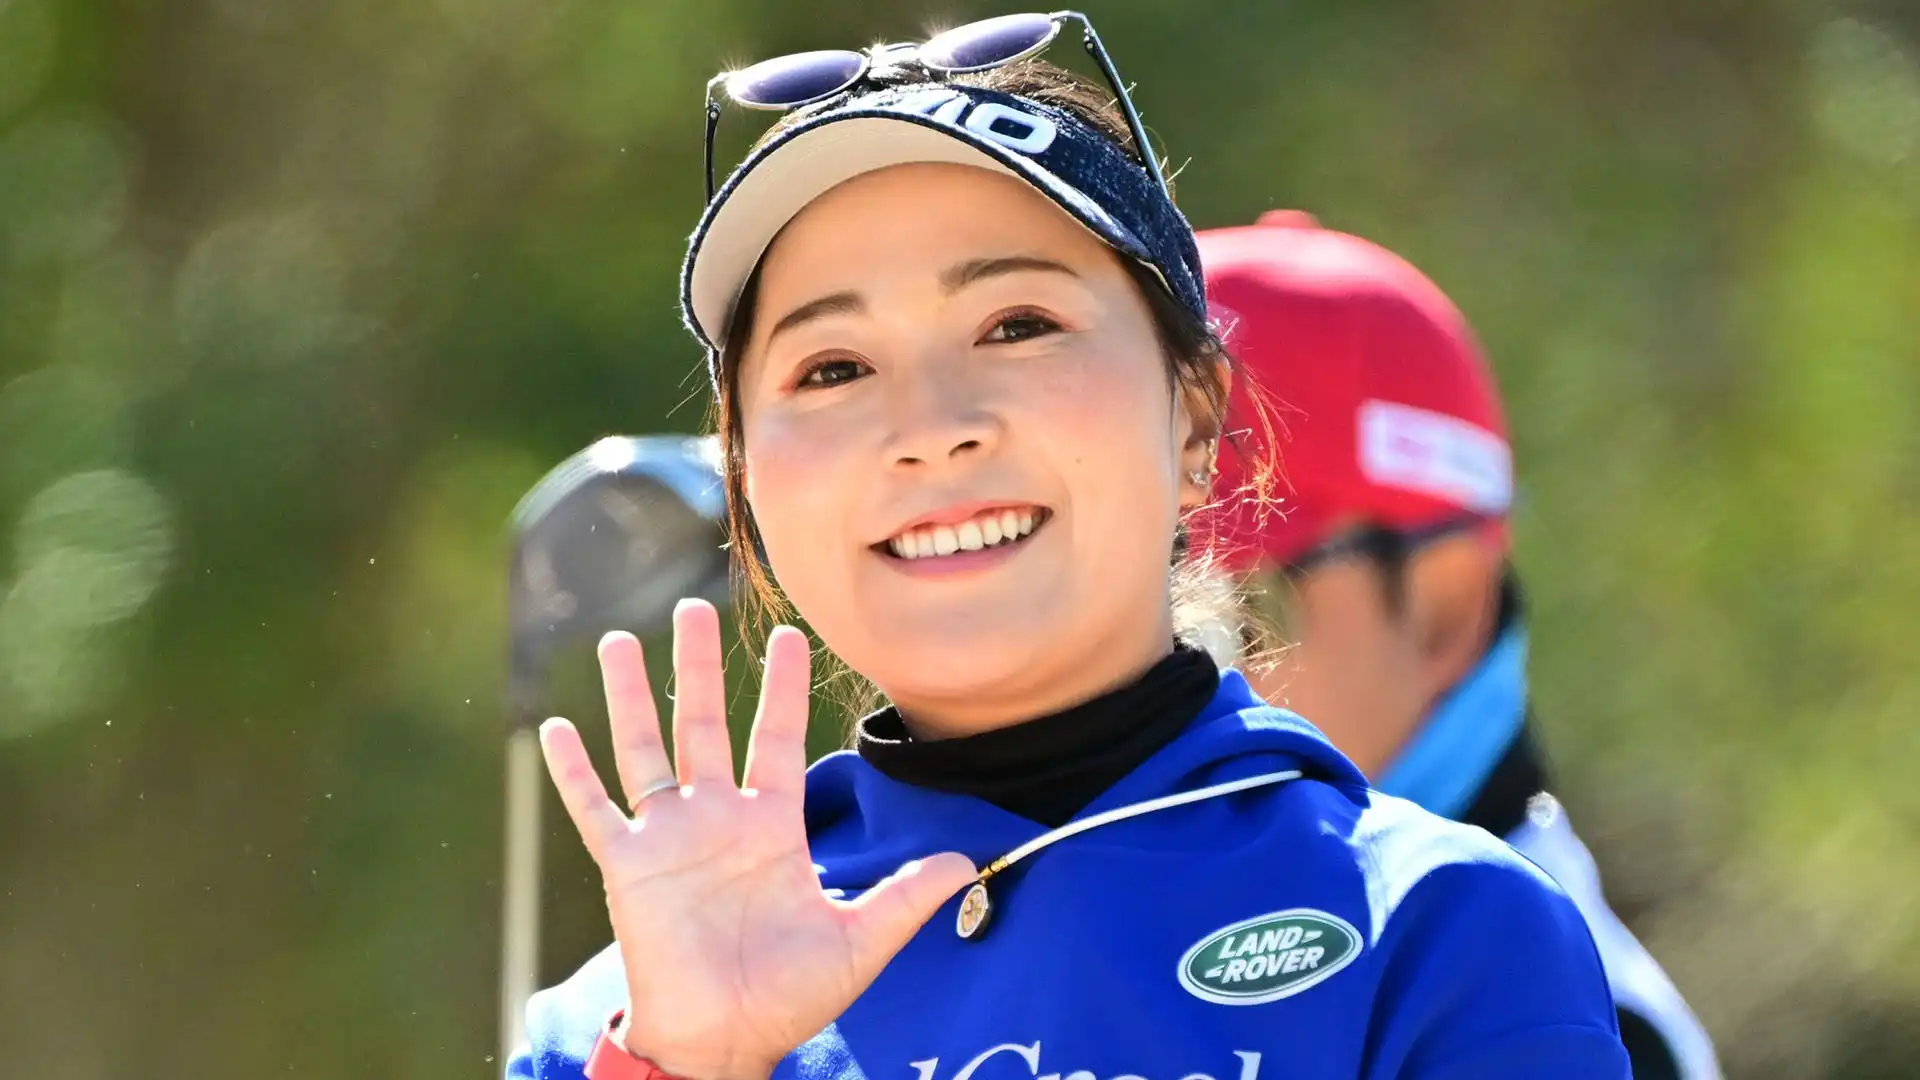 Tante atlete appaiate al settimo posto: Serena Aoki